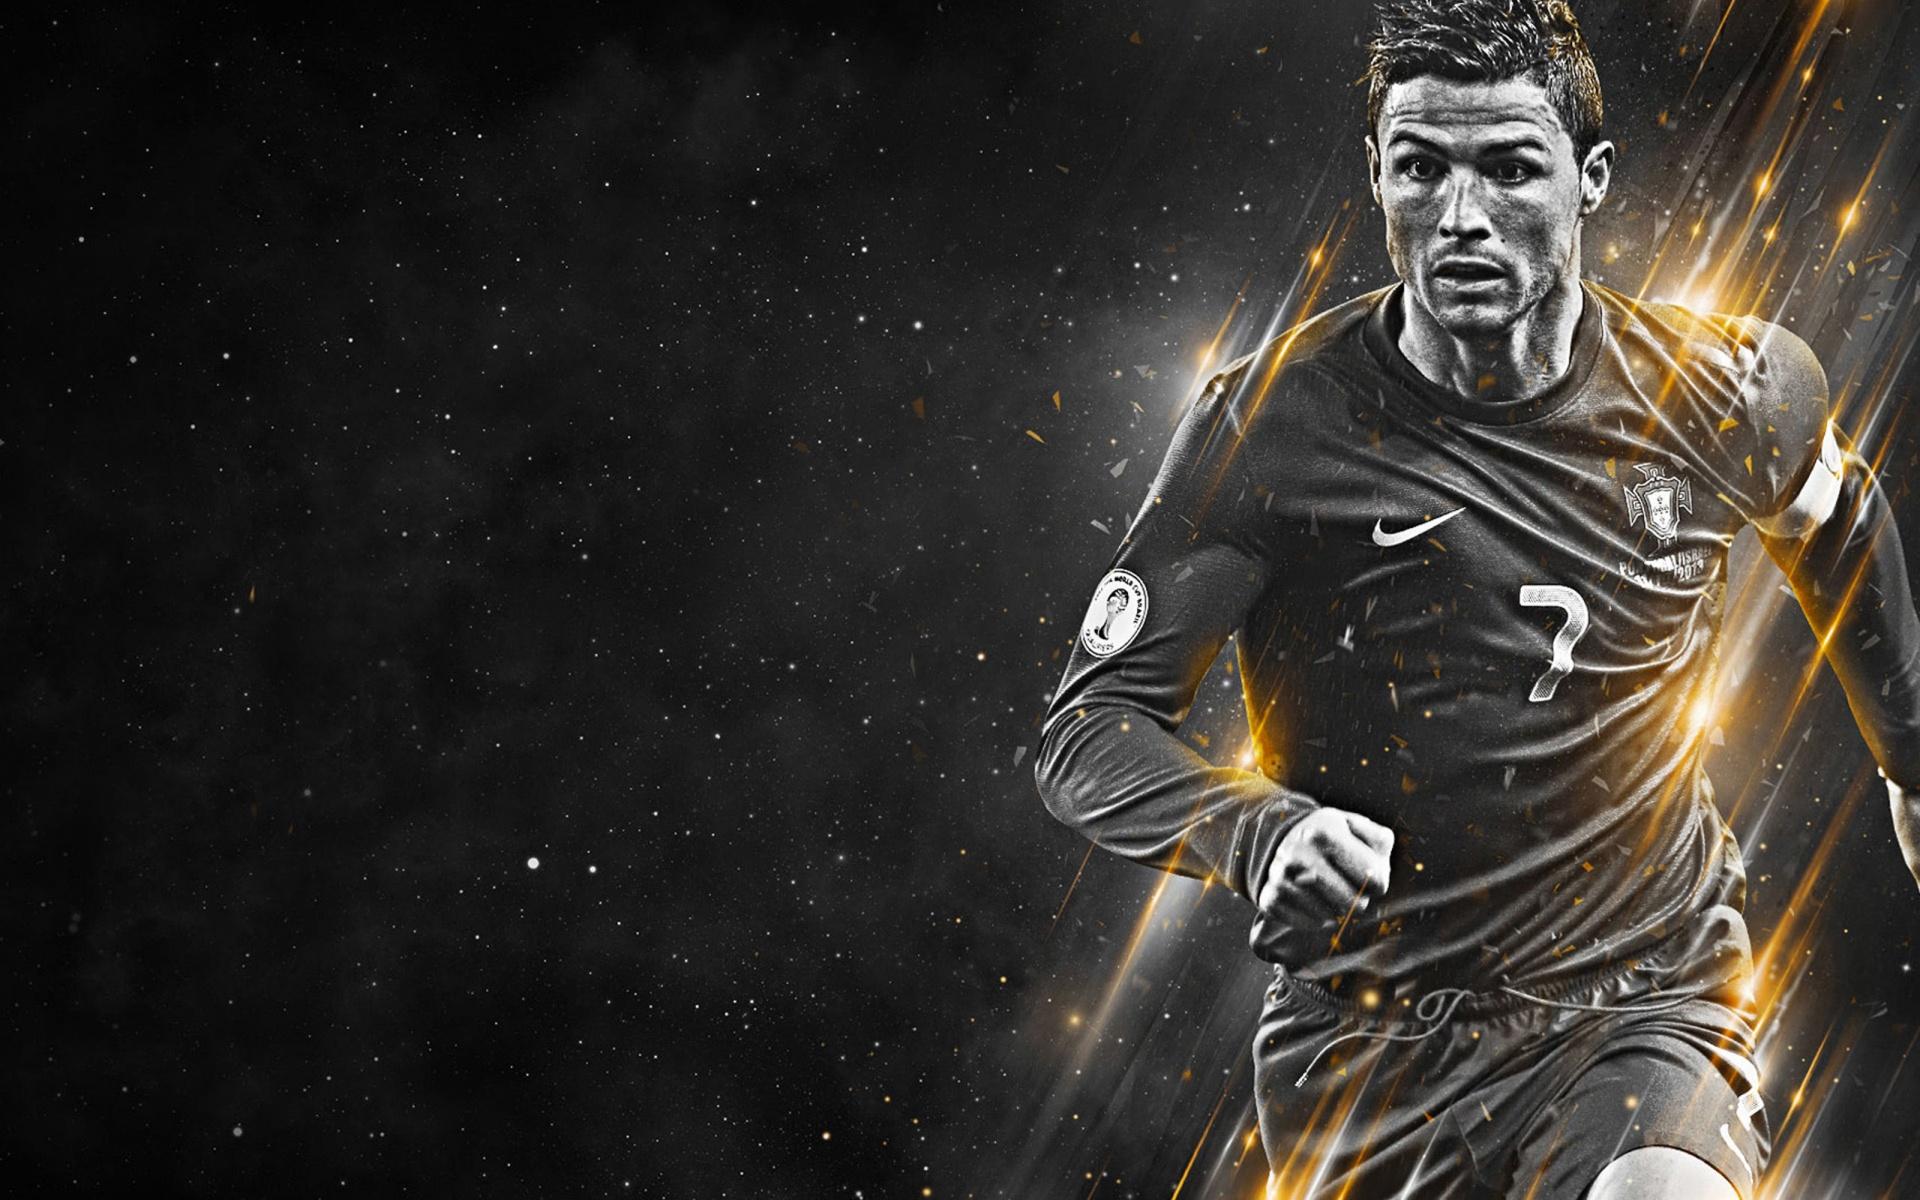 Cristiano Ronaldo Football Player Wallpaper in jpg format for free